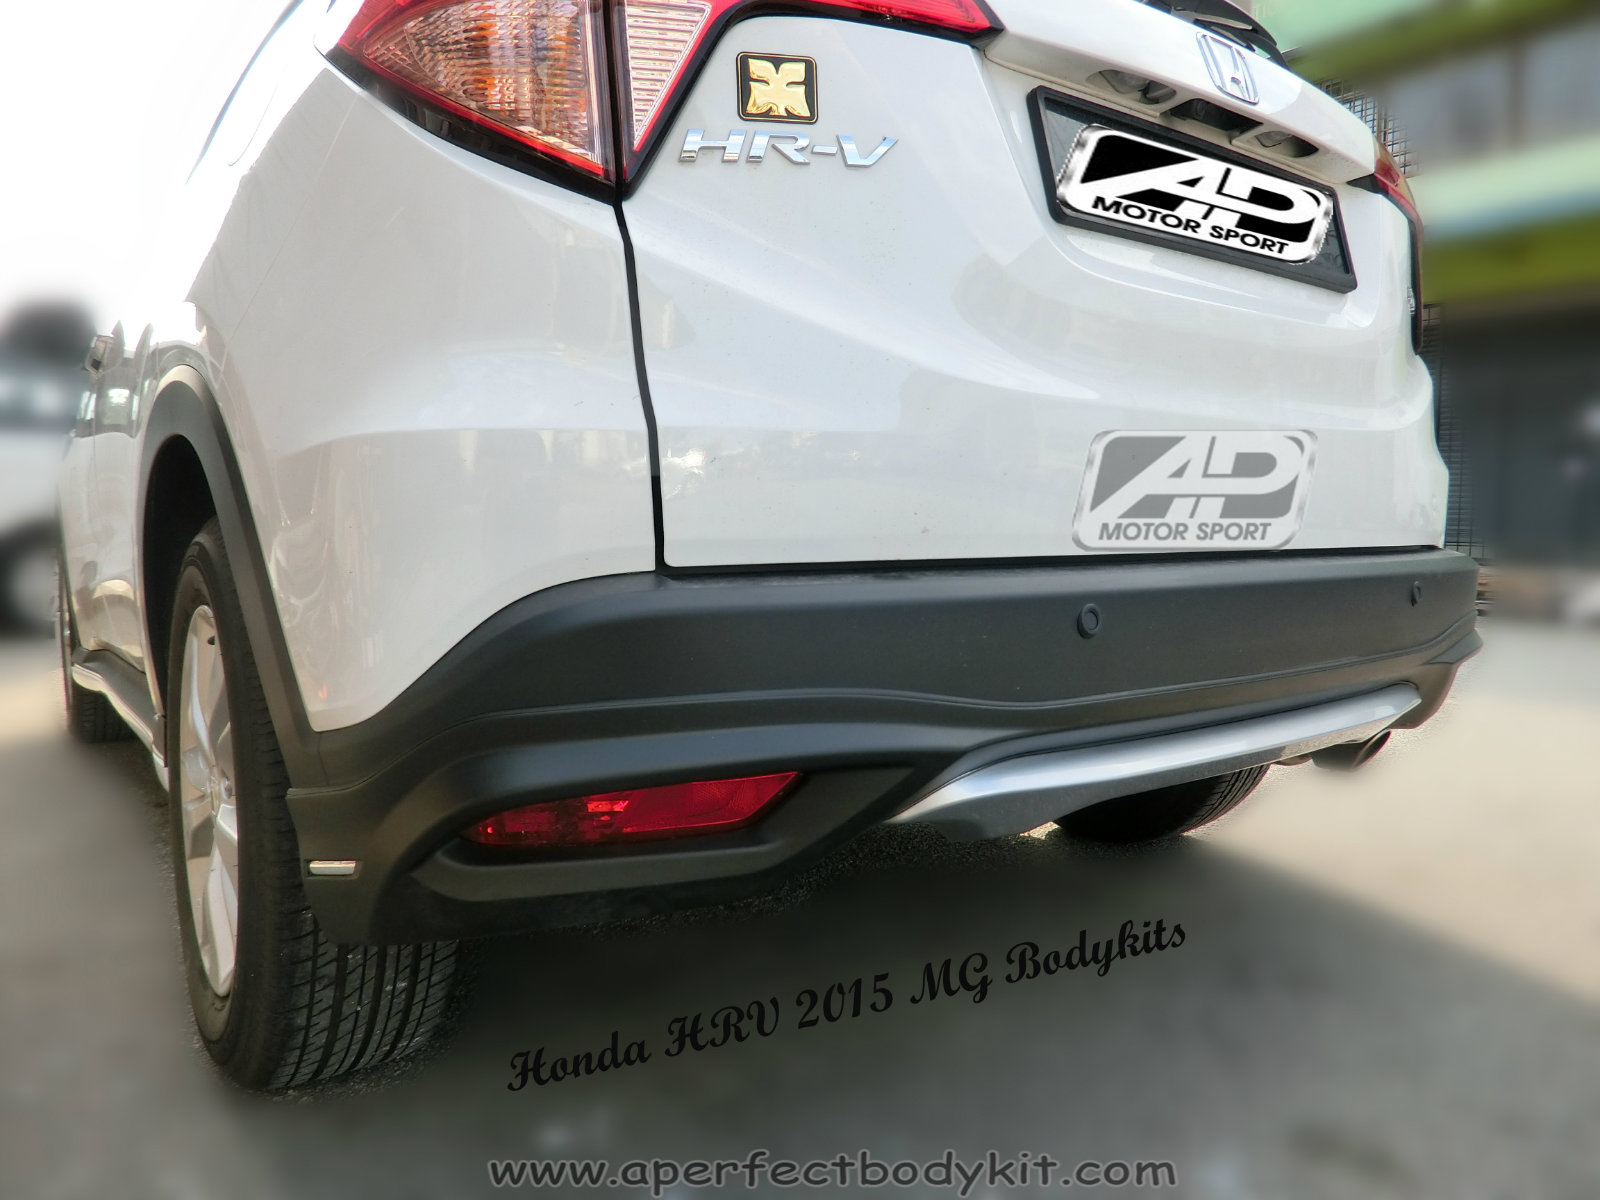 Honda HRV 2015 MG Bodykits 